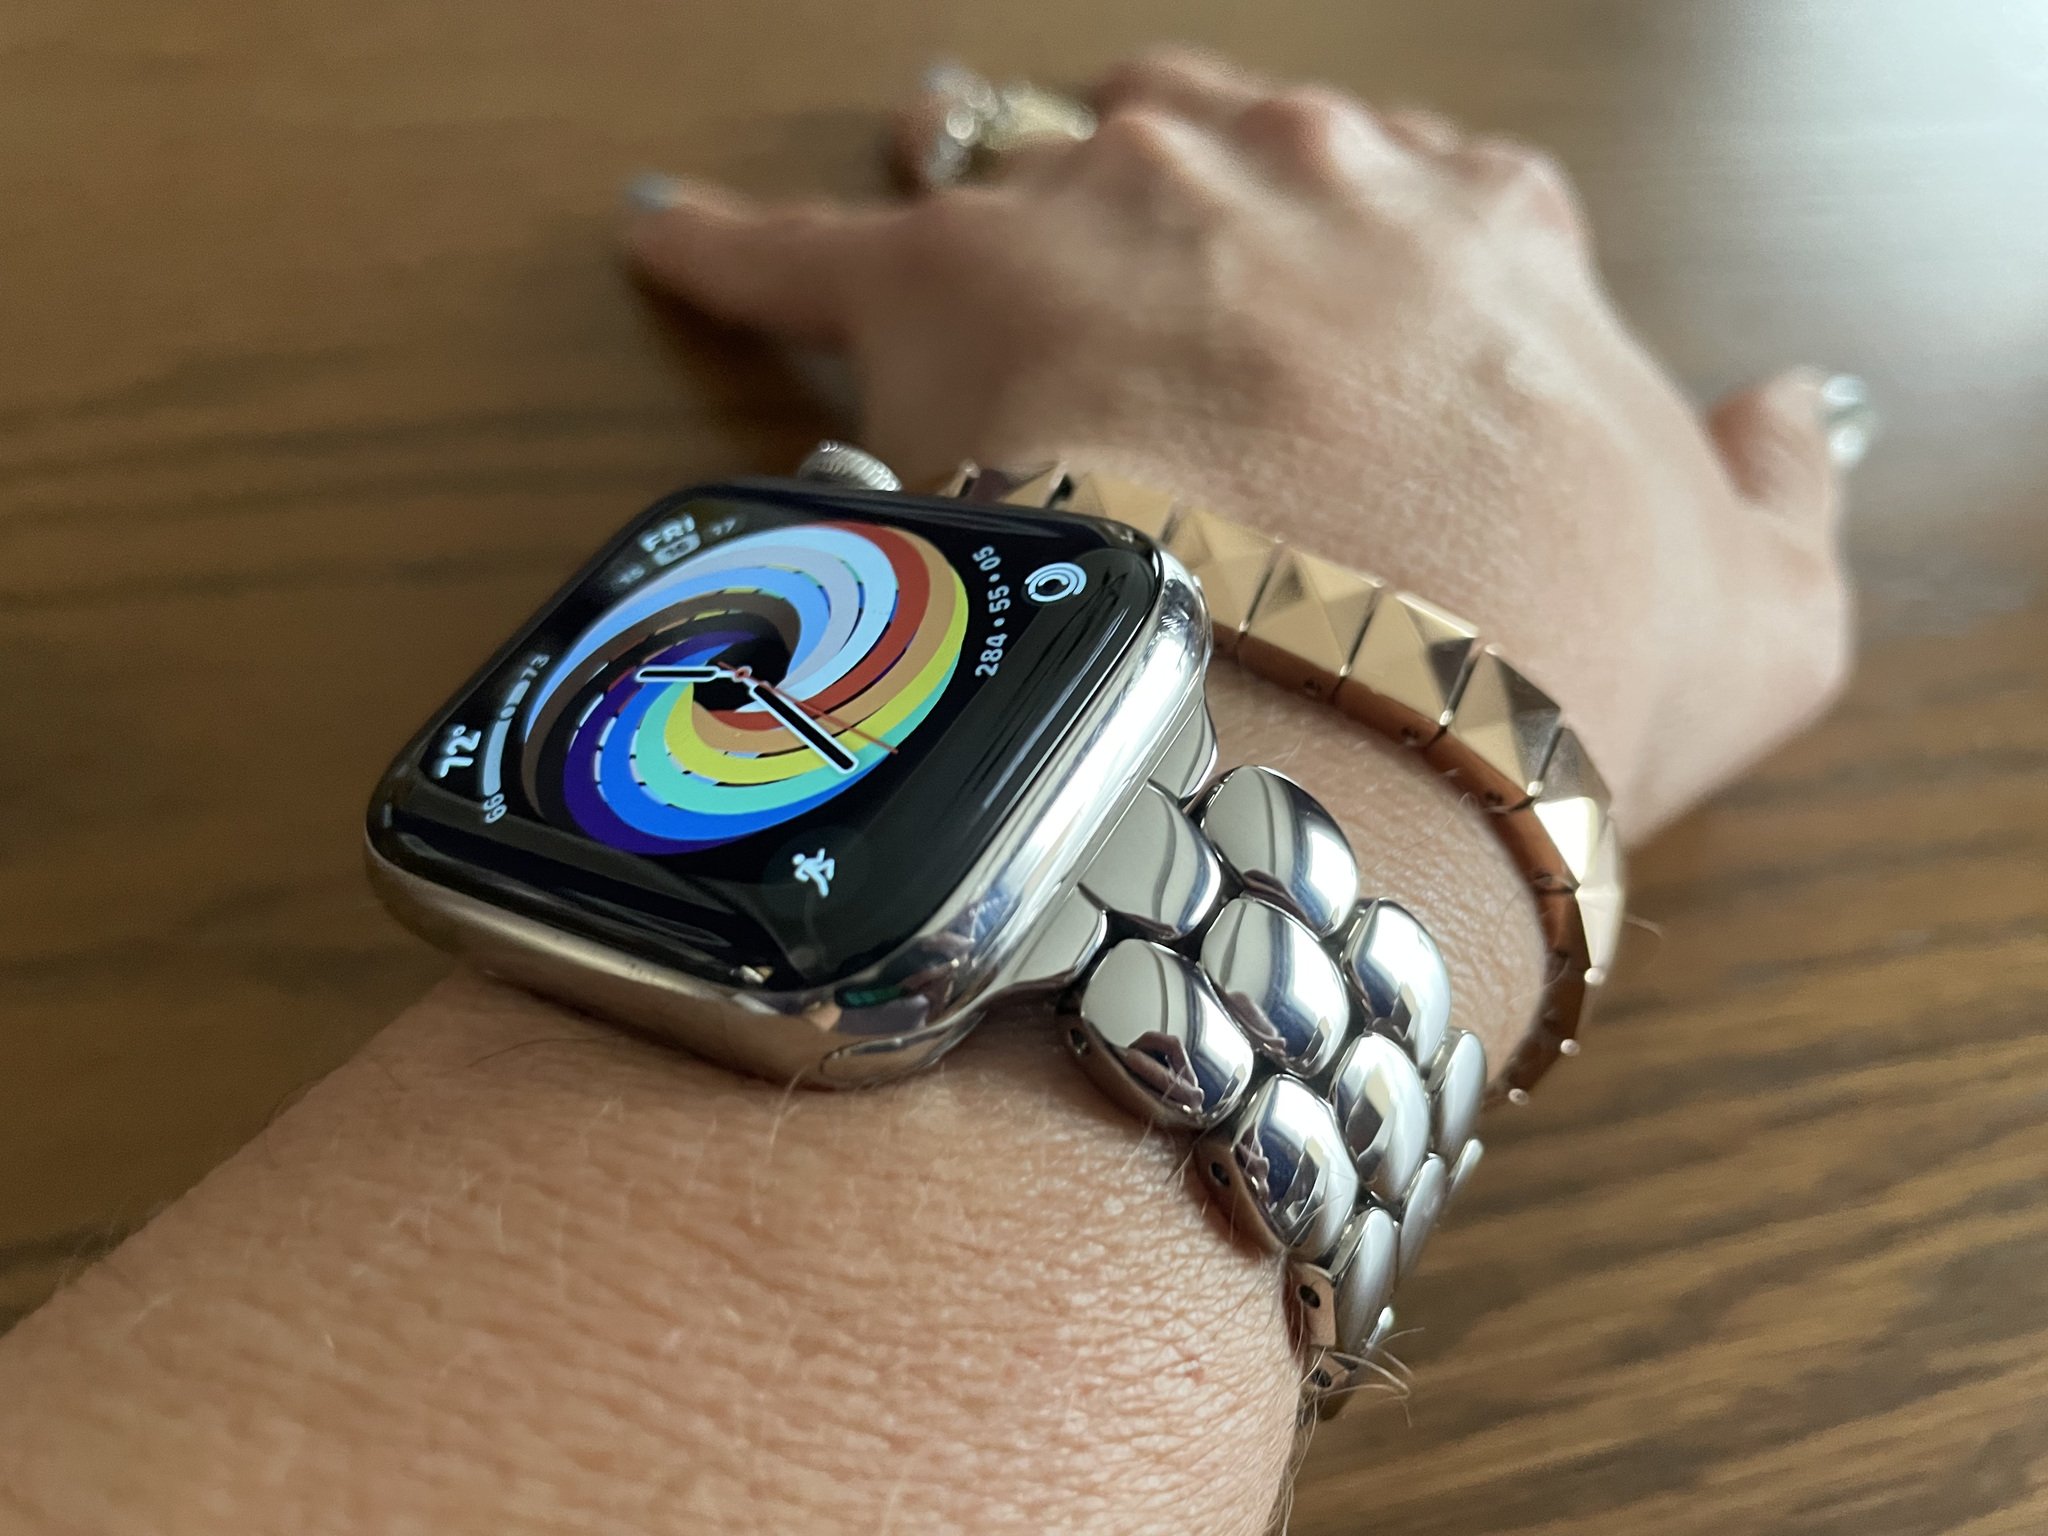 JUUK Ligero Apple Watch Band review: Stunning good looks | iMore